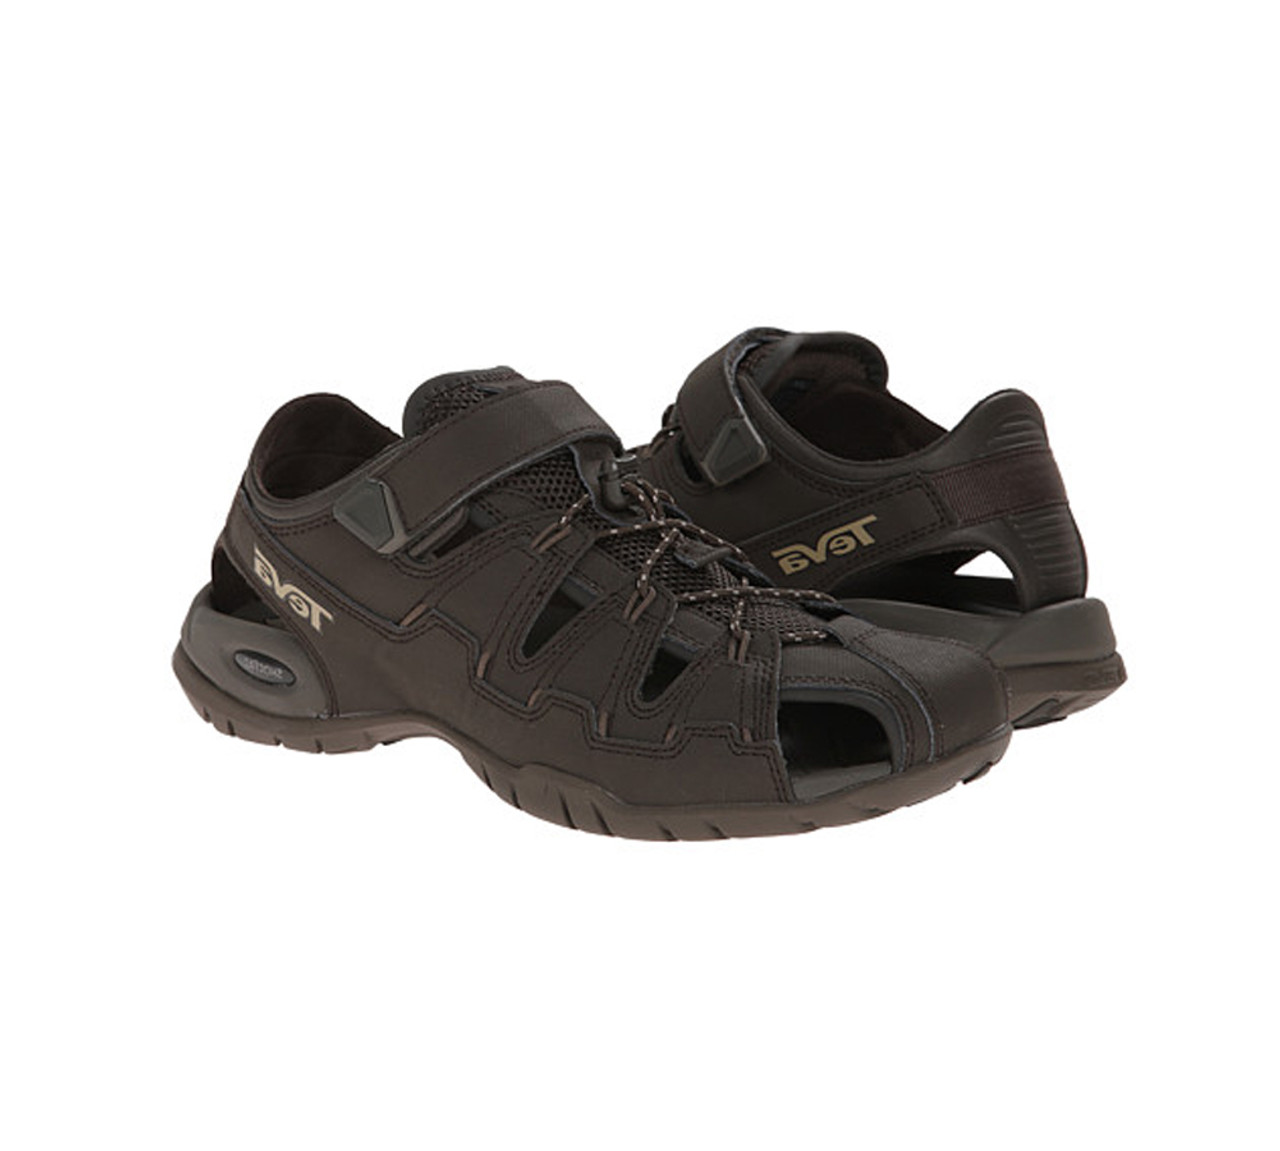 New Teva Men's M Dozer 4 Closed Toe Sandal - Green | Discount Teva Men's Sandals More Shoolu.com | Shoolu.com